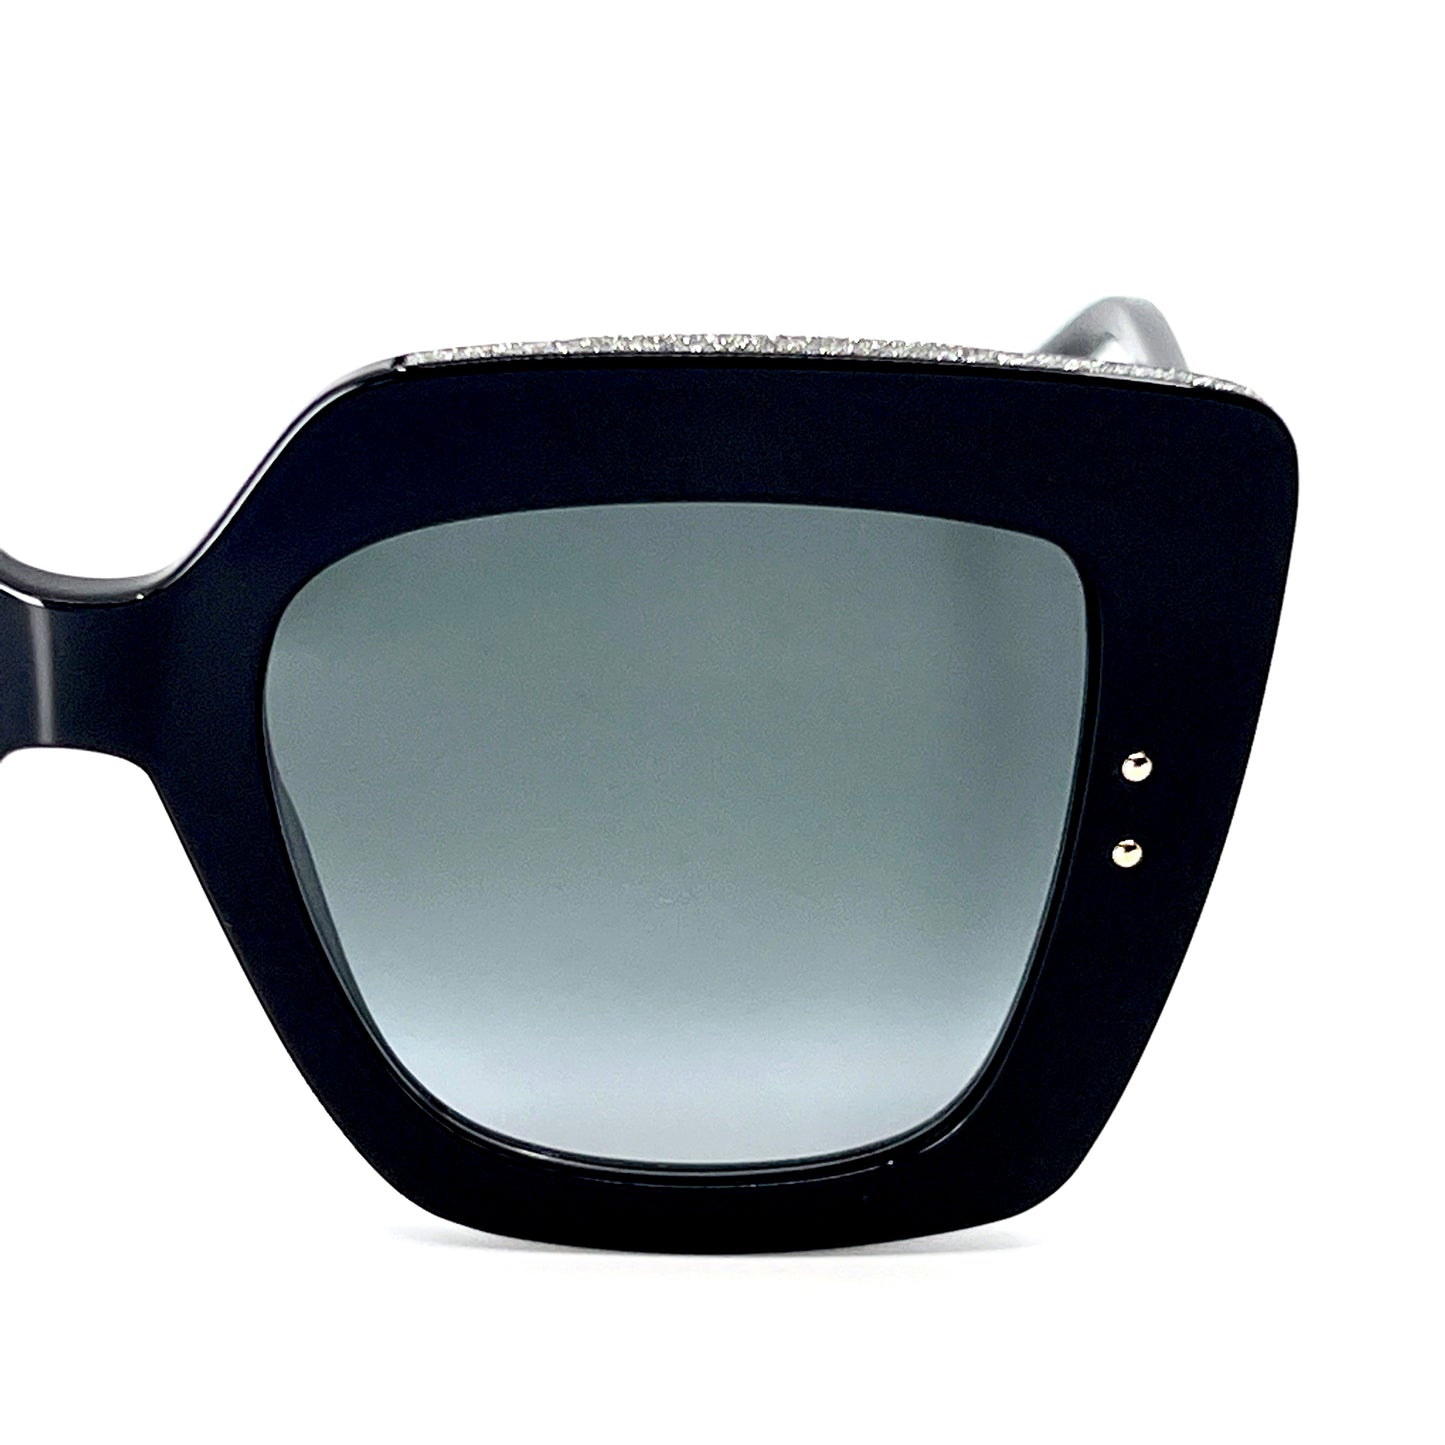 JIMMY CHOO Sunglasses AURI/G/S 8079O